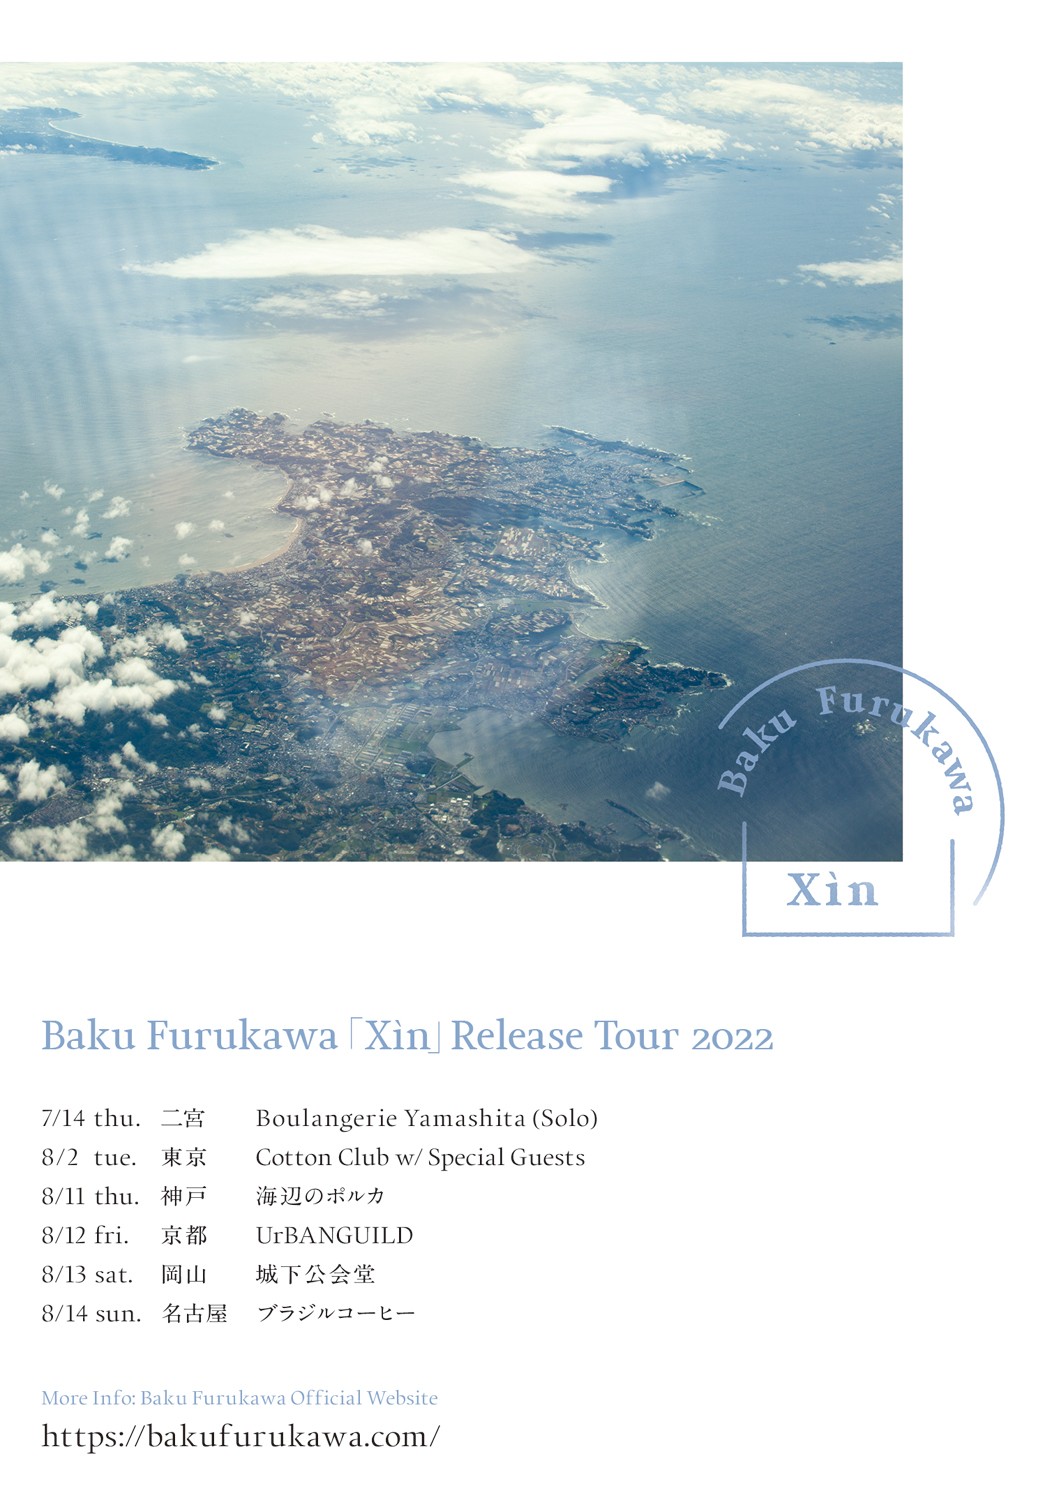 Baku Furukawa "Xìn" Release Tour 2022